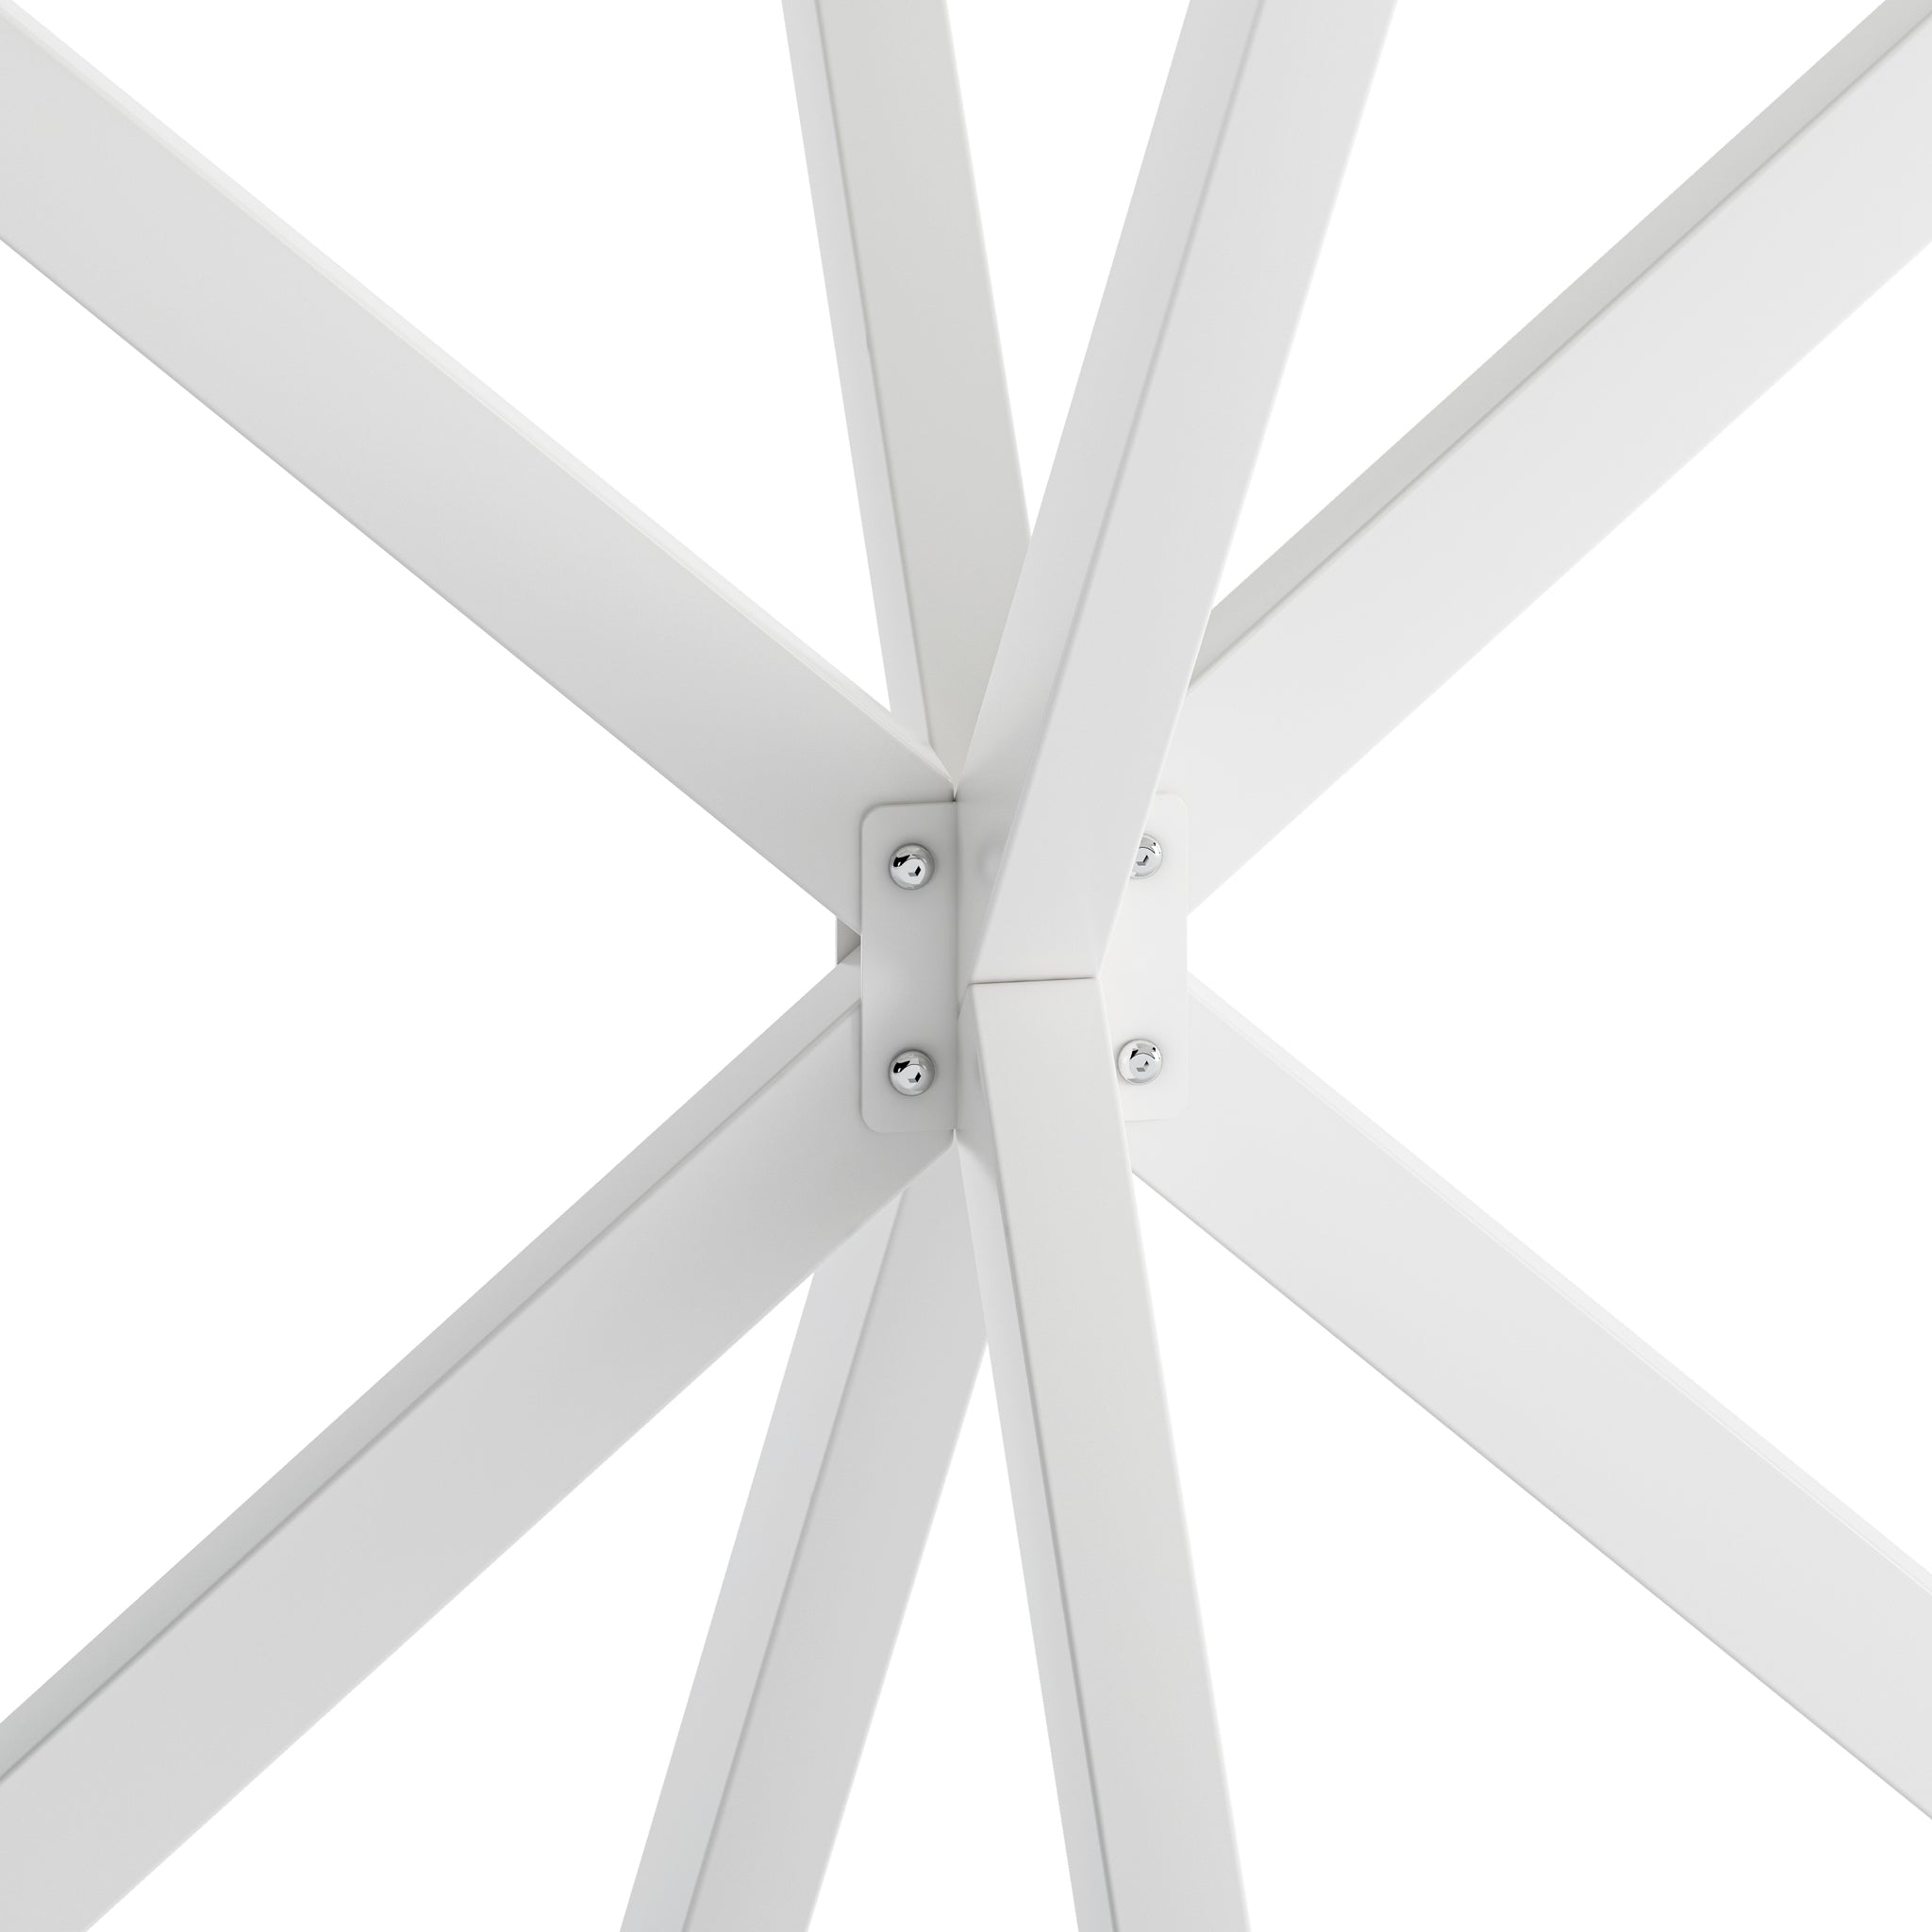 42.13'' Modern Cross Leg Round Dining Table, White white-mdf+metal